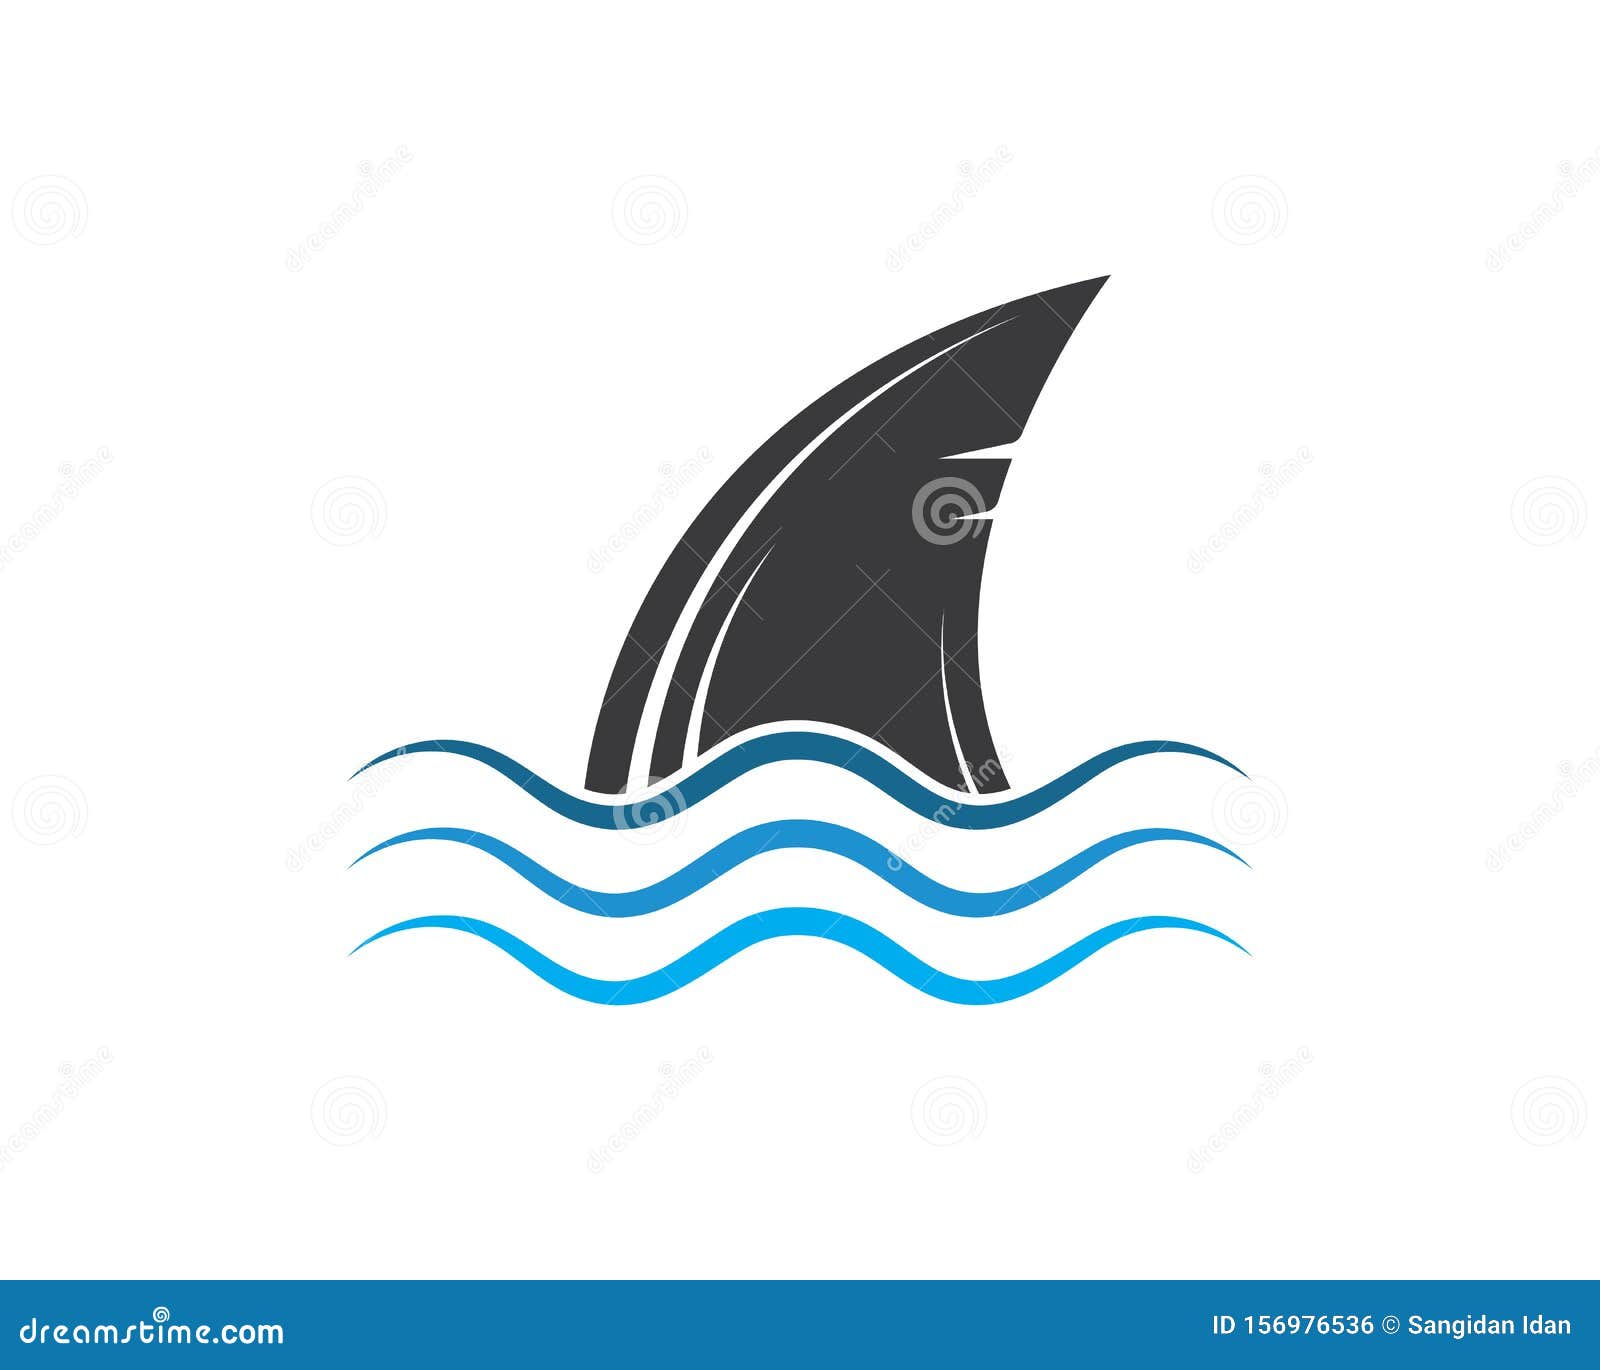 shark fin icon  